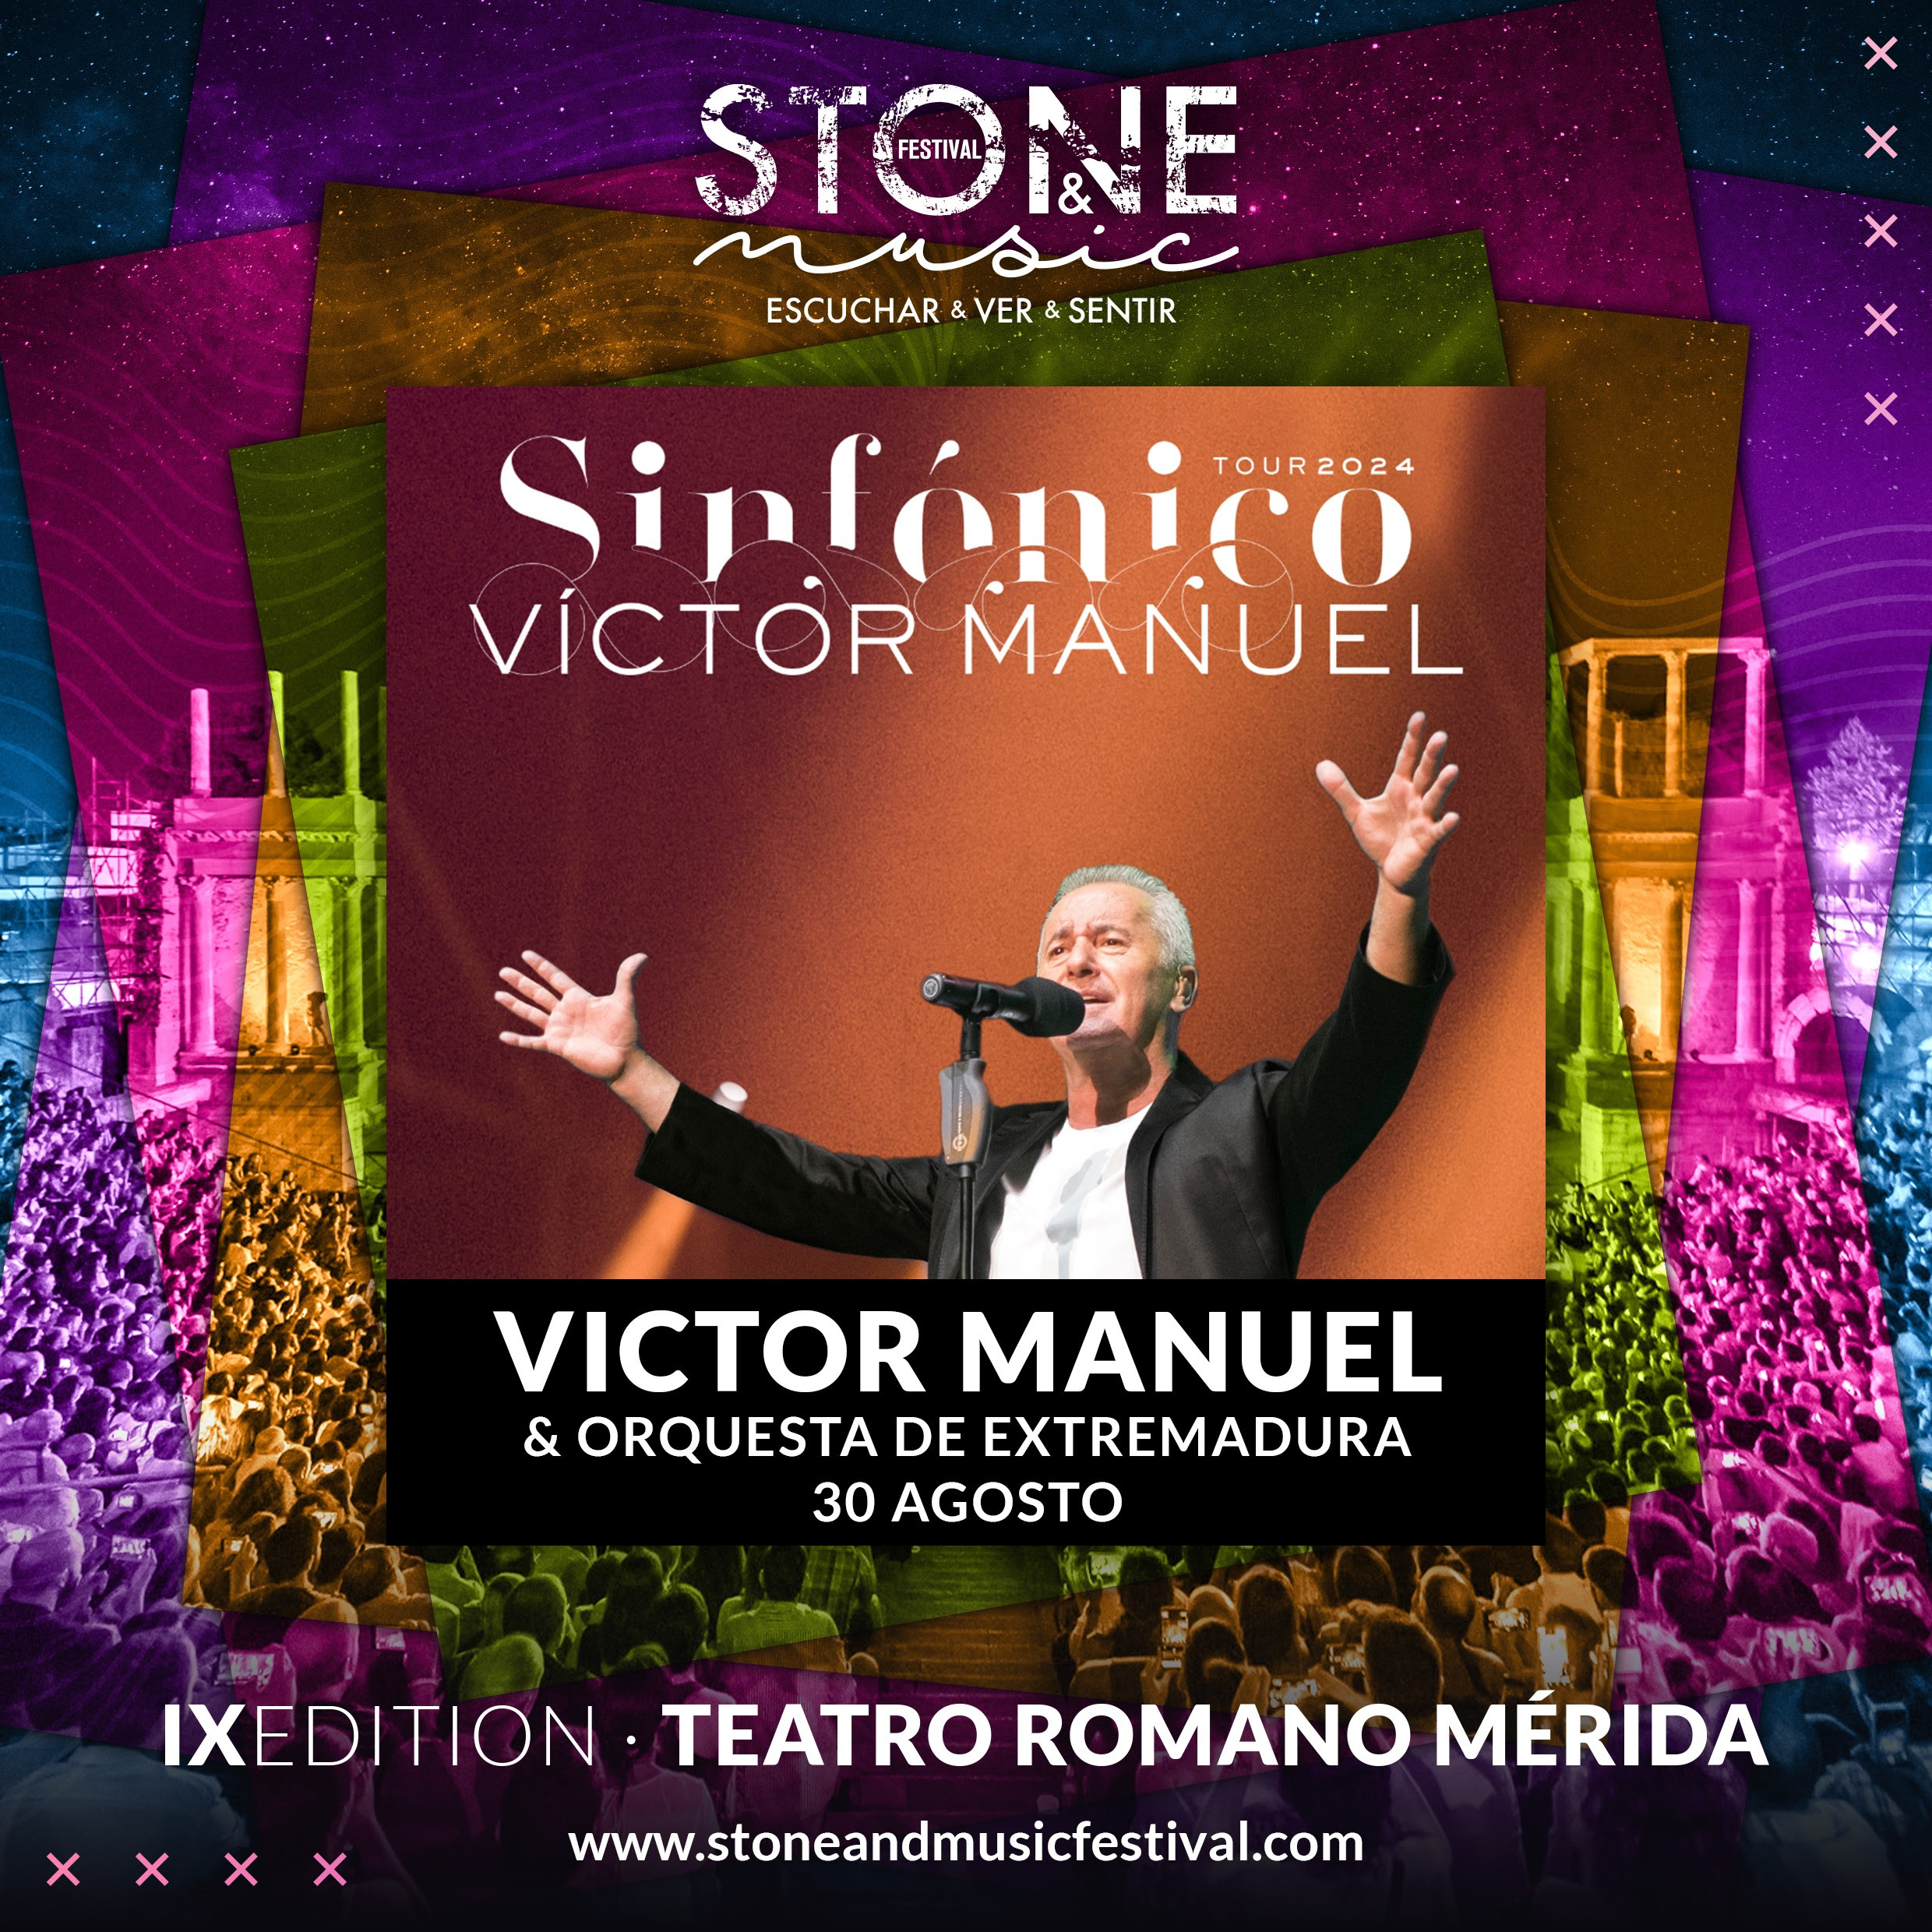 Image 3 of article The Black Crowes y Víctor Manuel se suman al cartel del STONE&MUSIC Festival